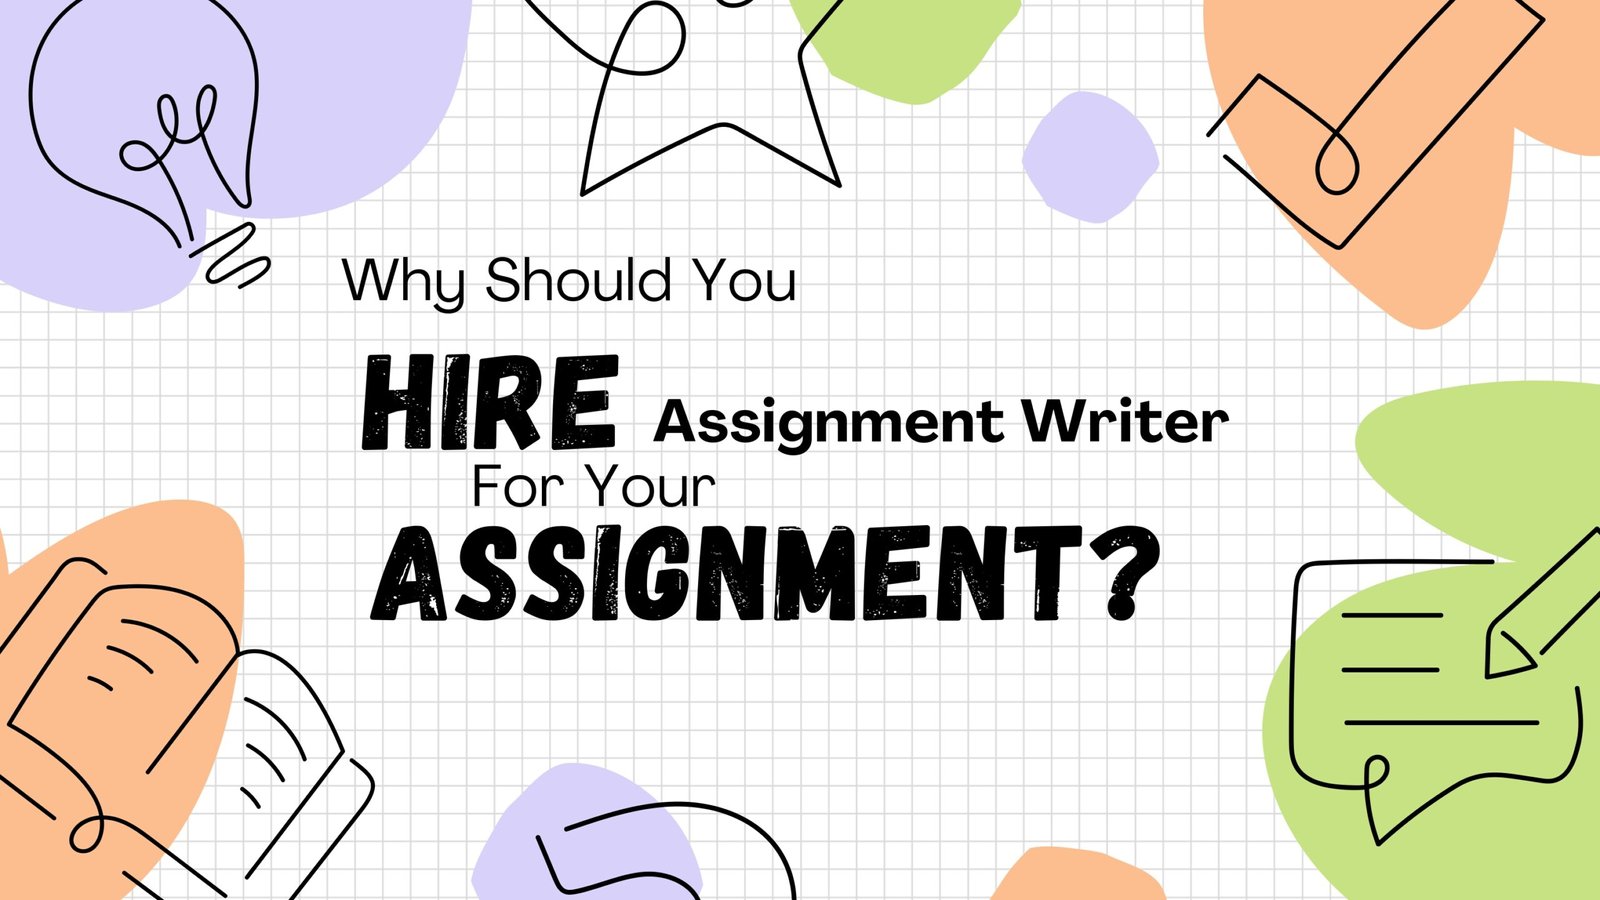 Assignment Writer